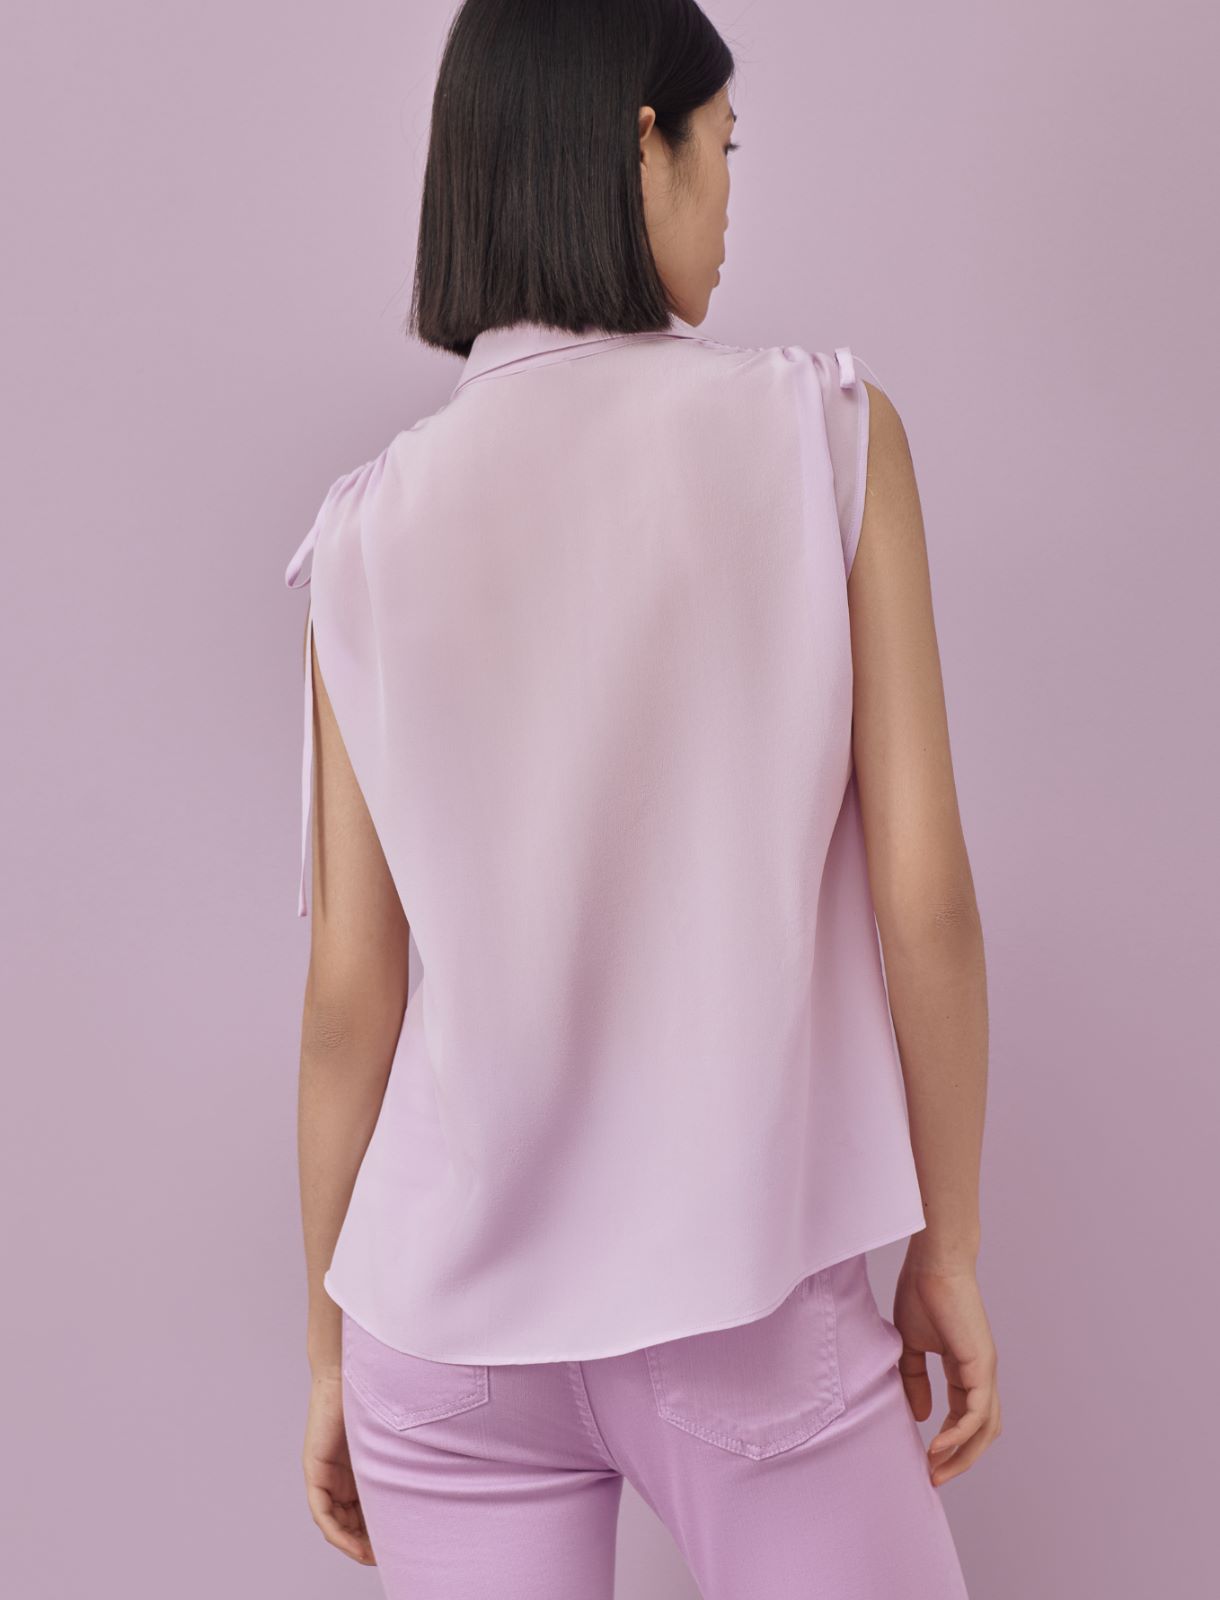 Silk shirt - Lilac - Marella - 2